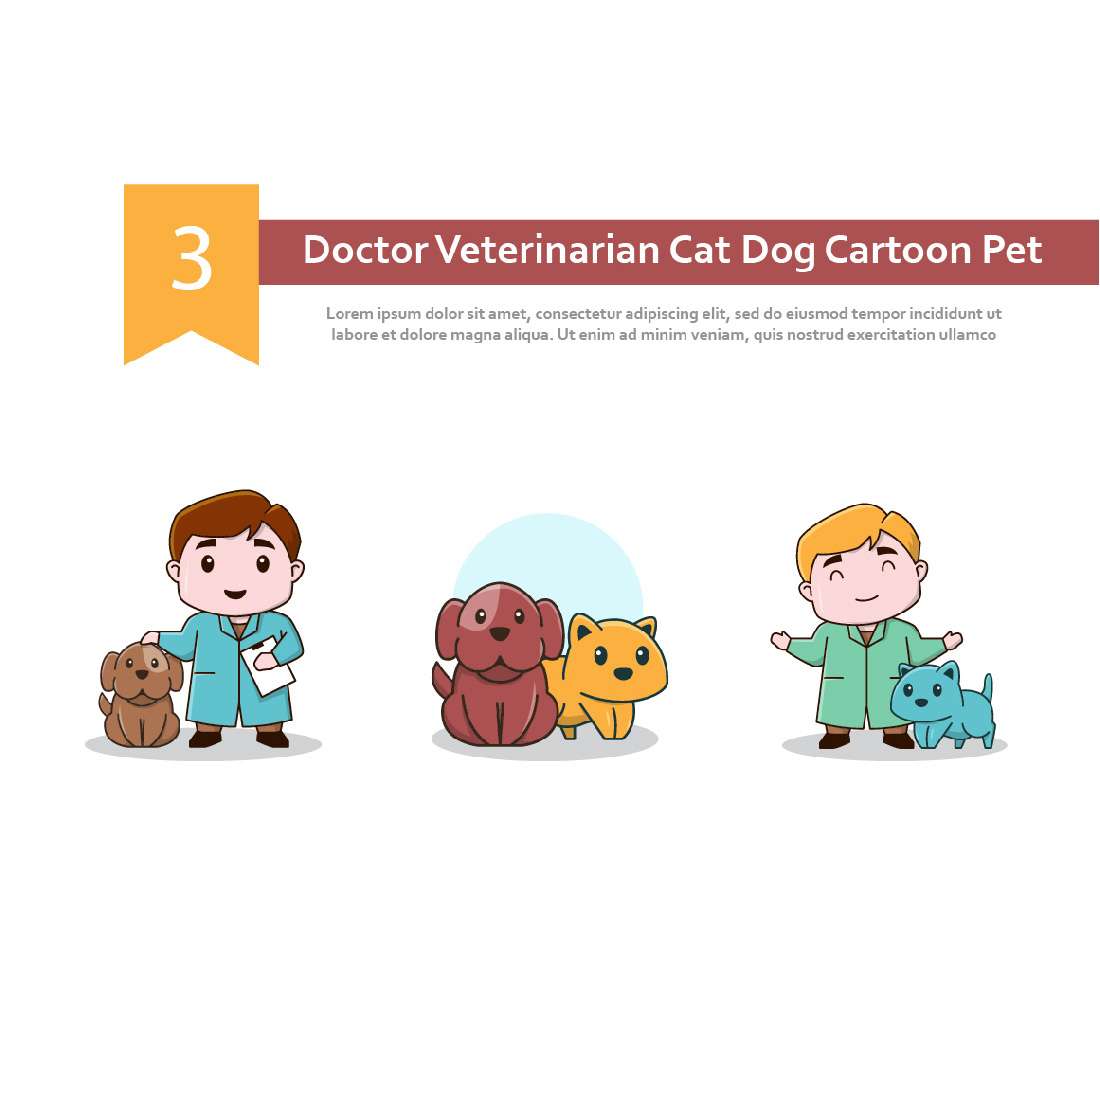 3 Doctor Veterinarian Cat Dog Cartoon Pet cover image.